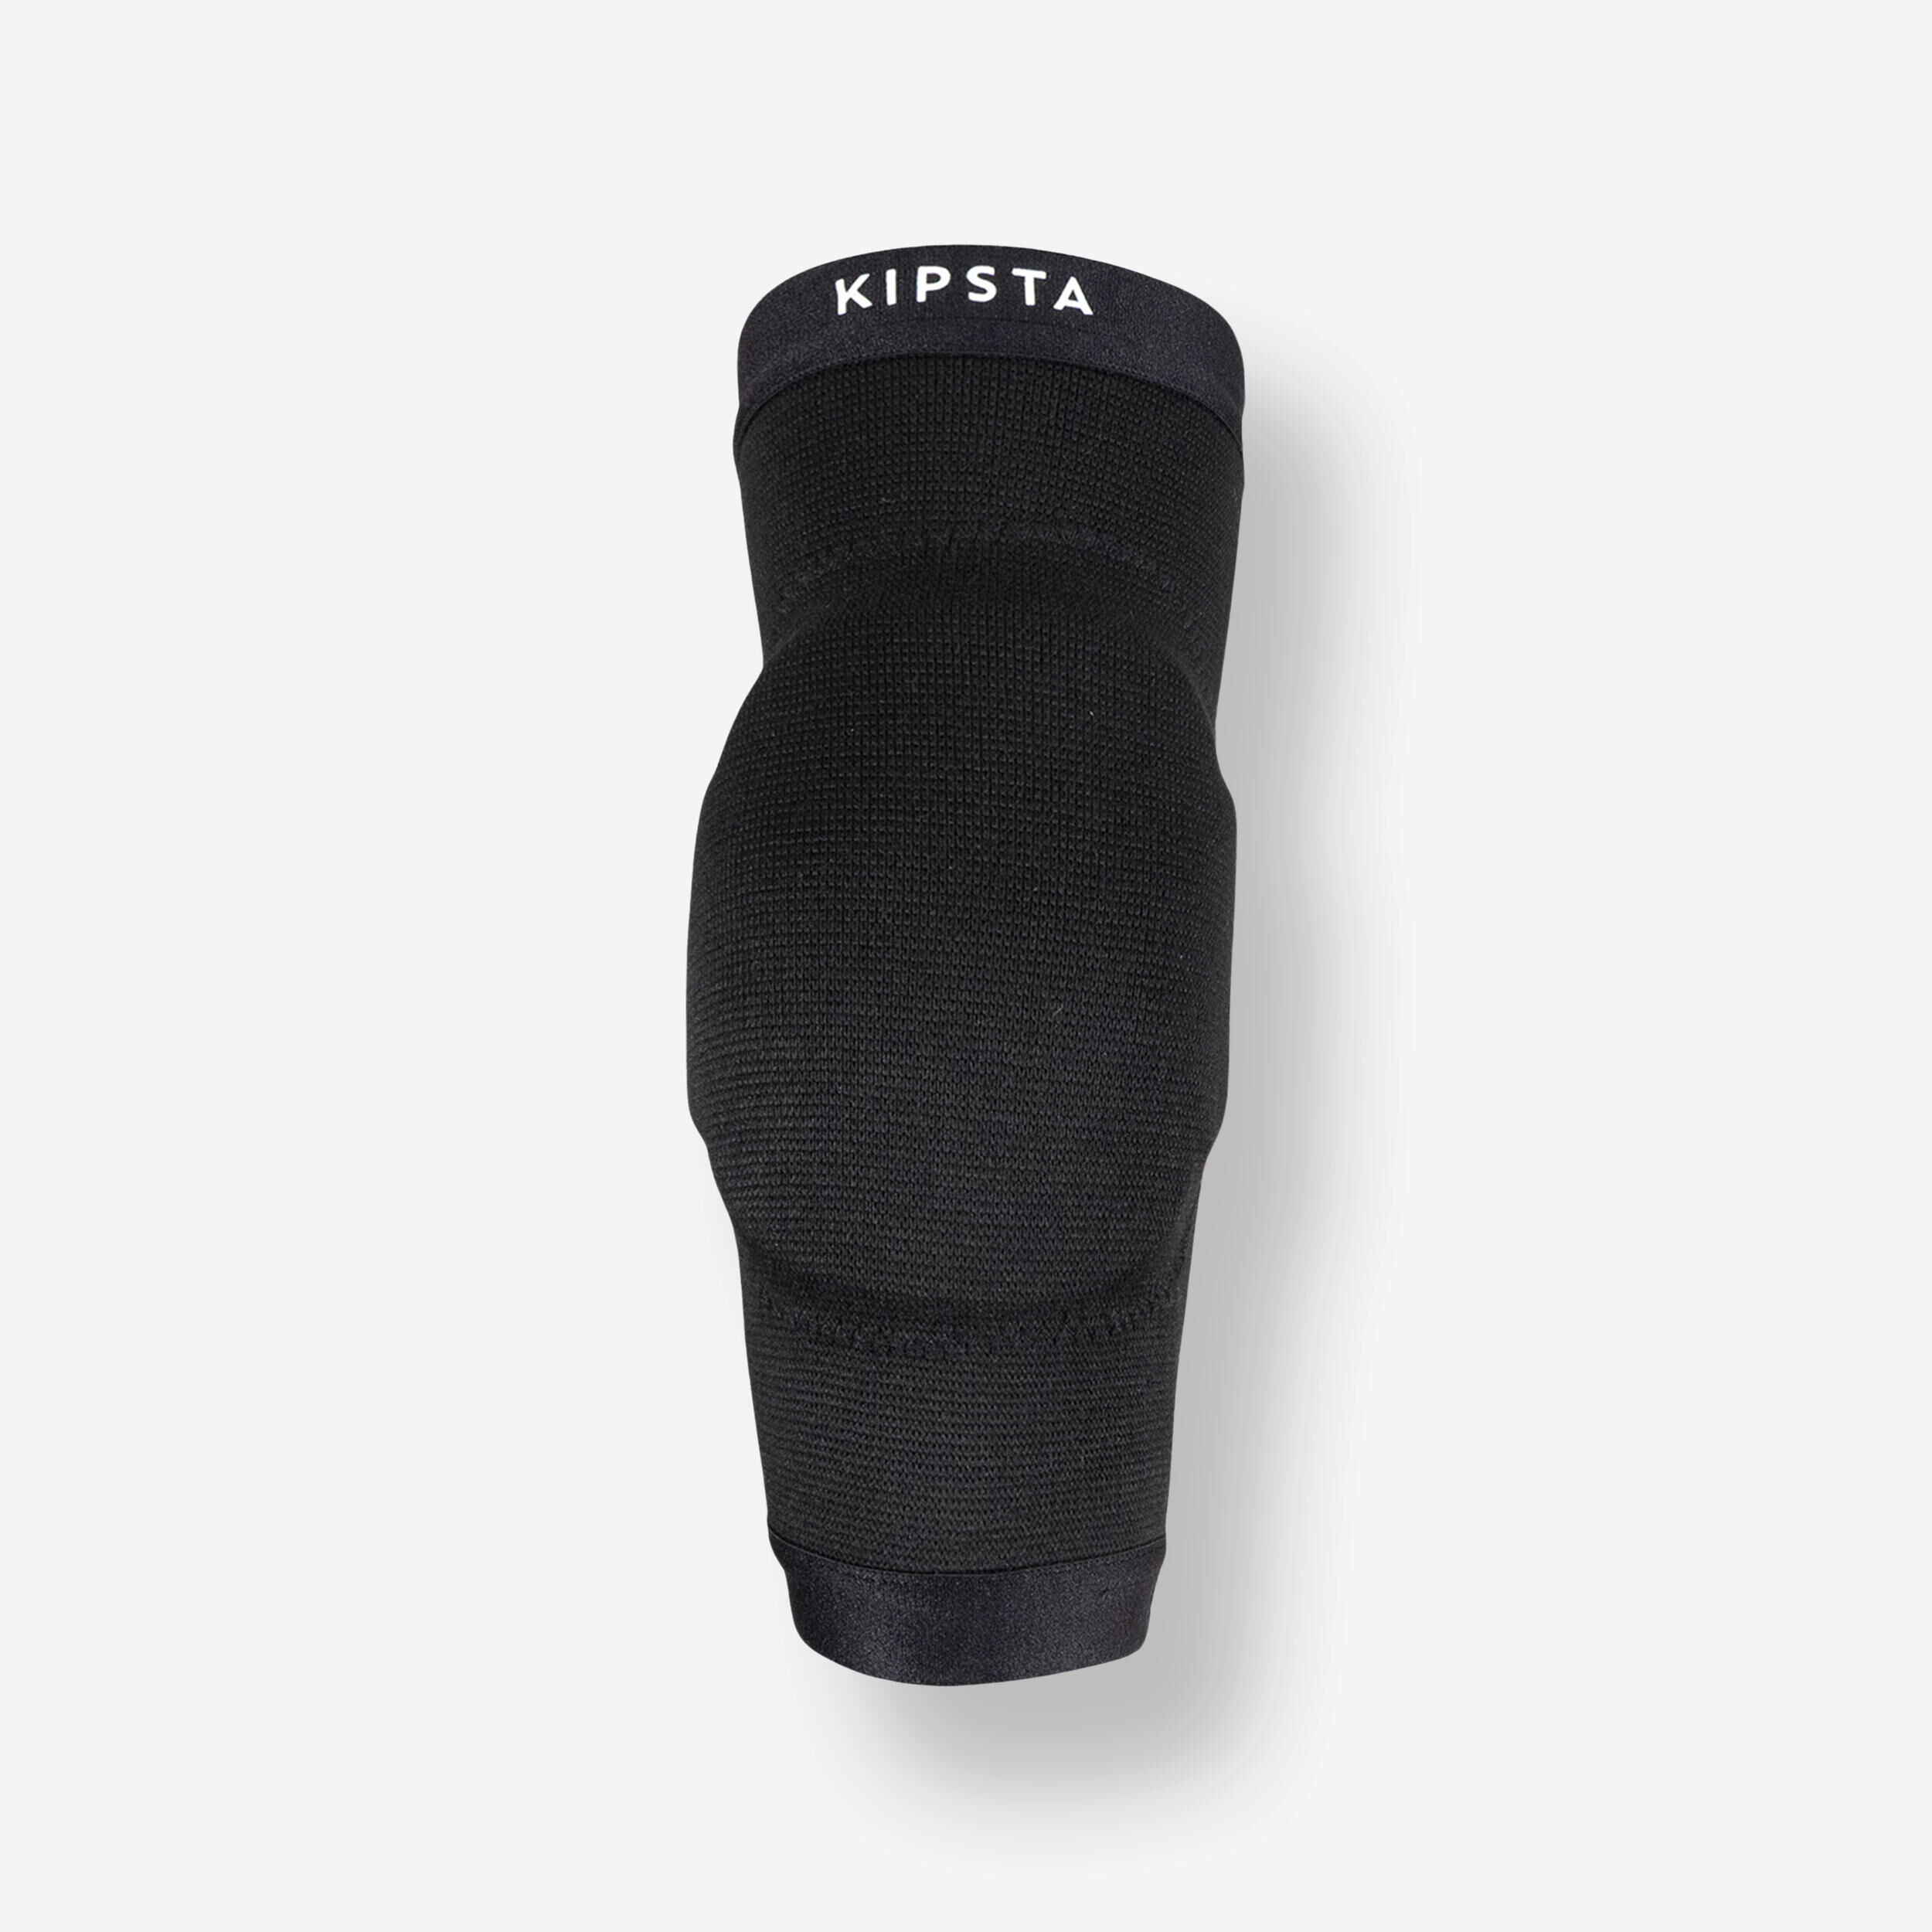 KIPSTA Volleyball Knee Pads VKP500 - Black